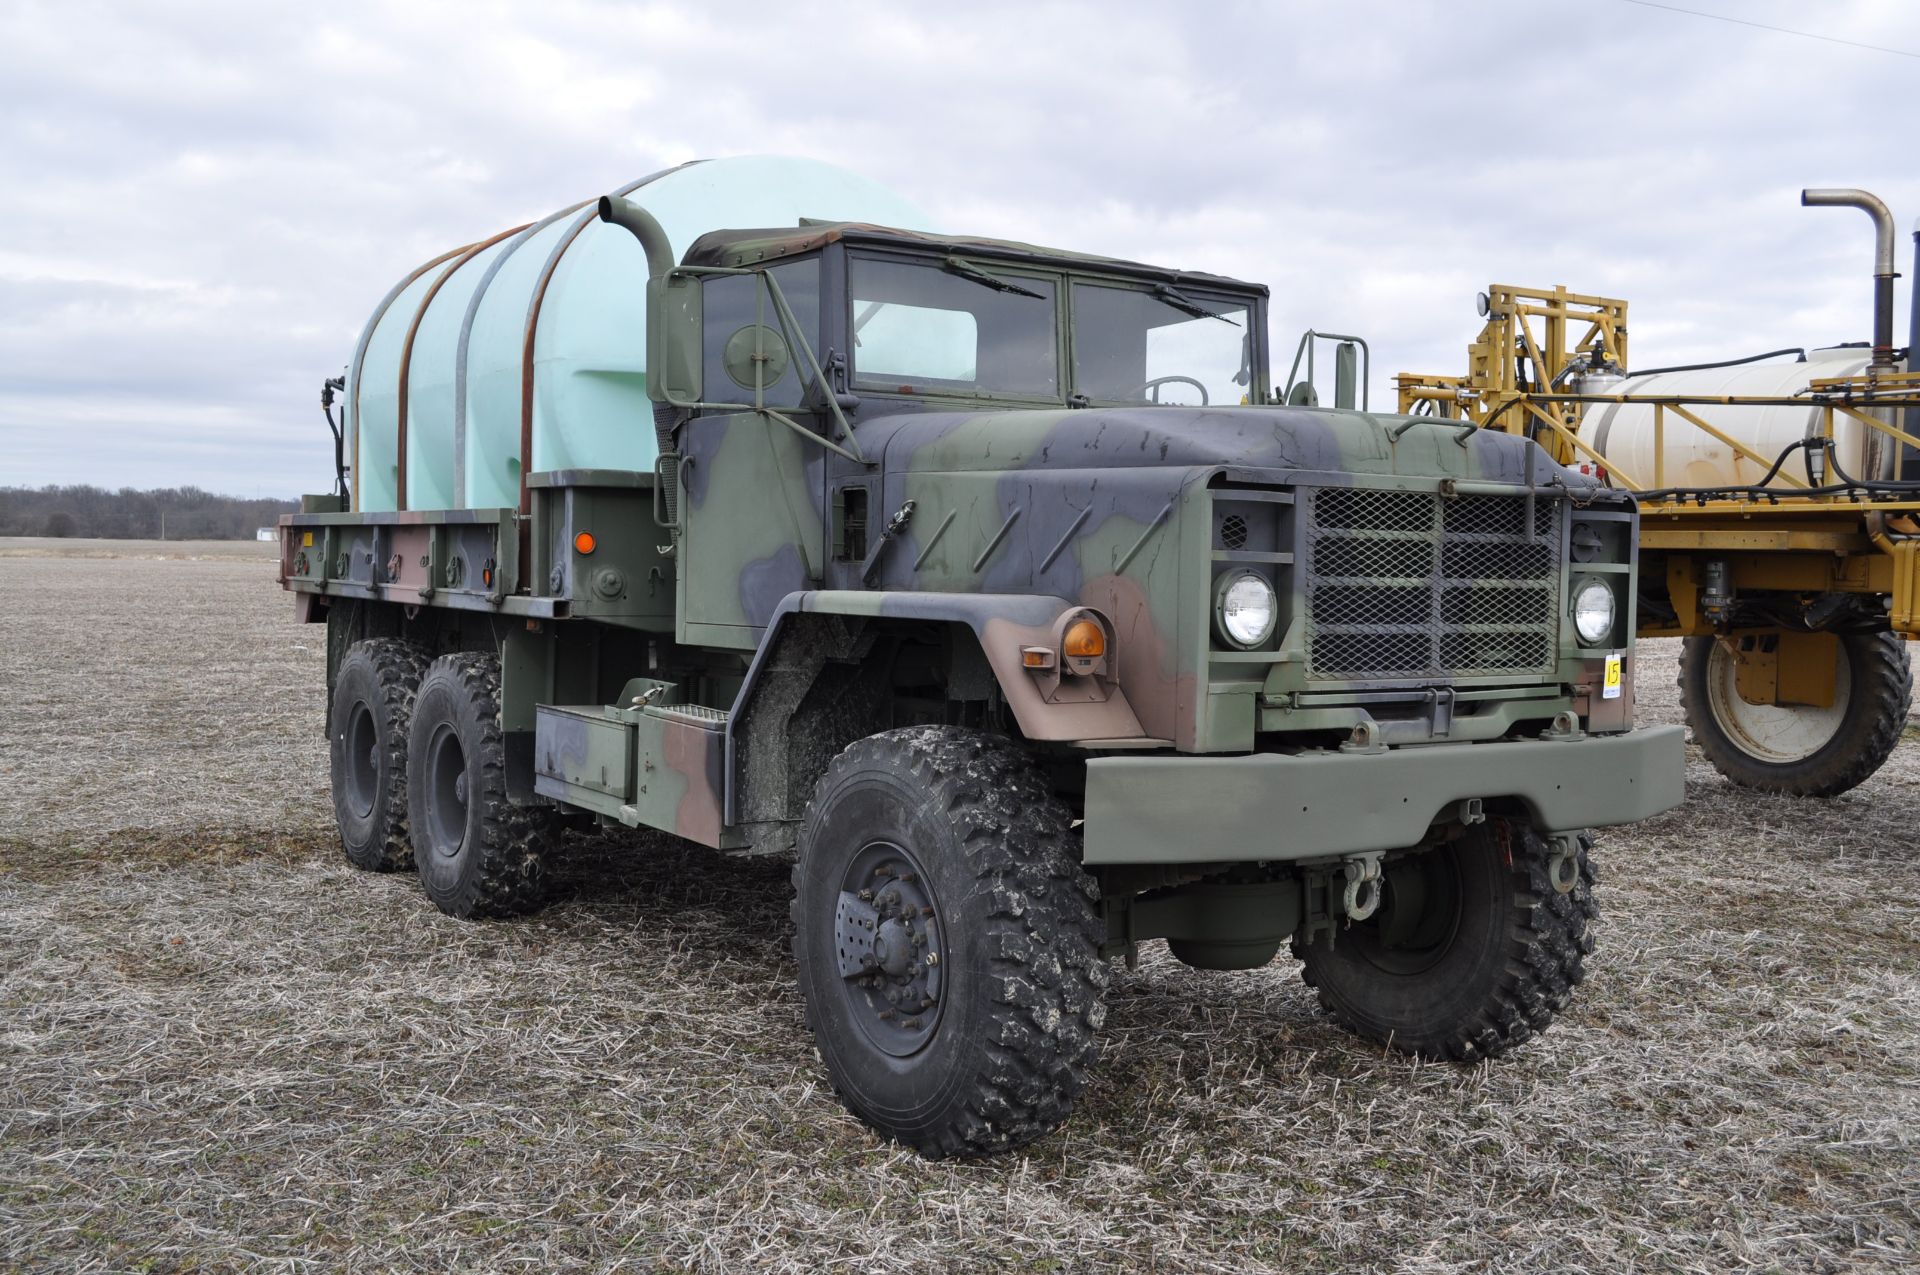 Harsco 5 Ton 6x6 military truck - Image 4 of 31